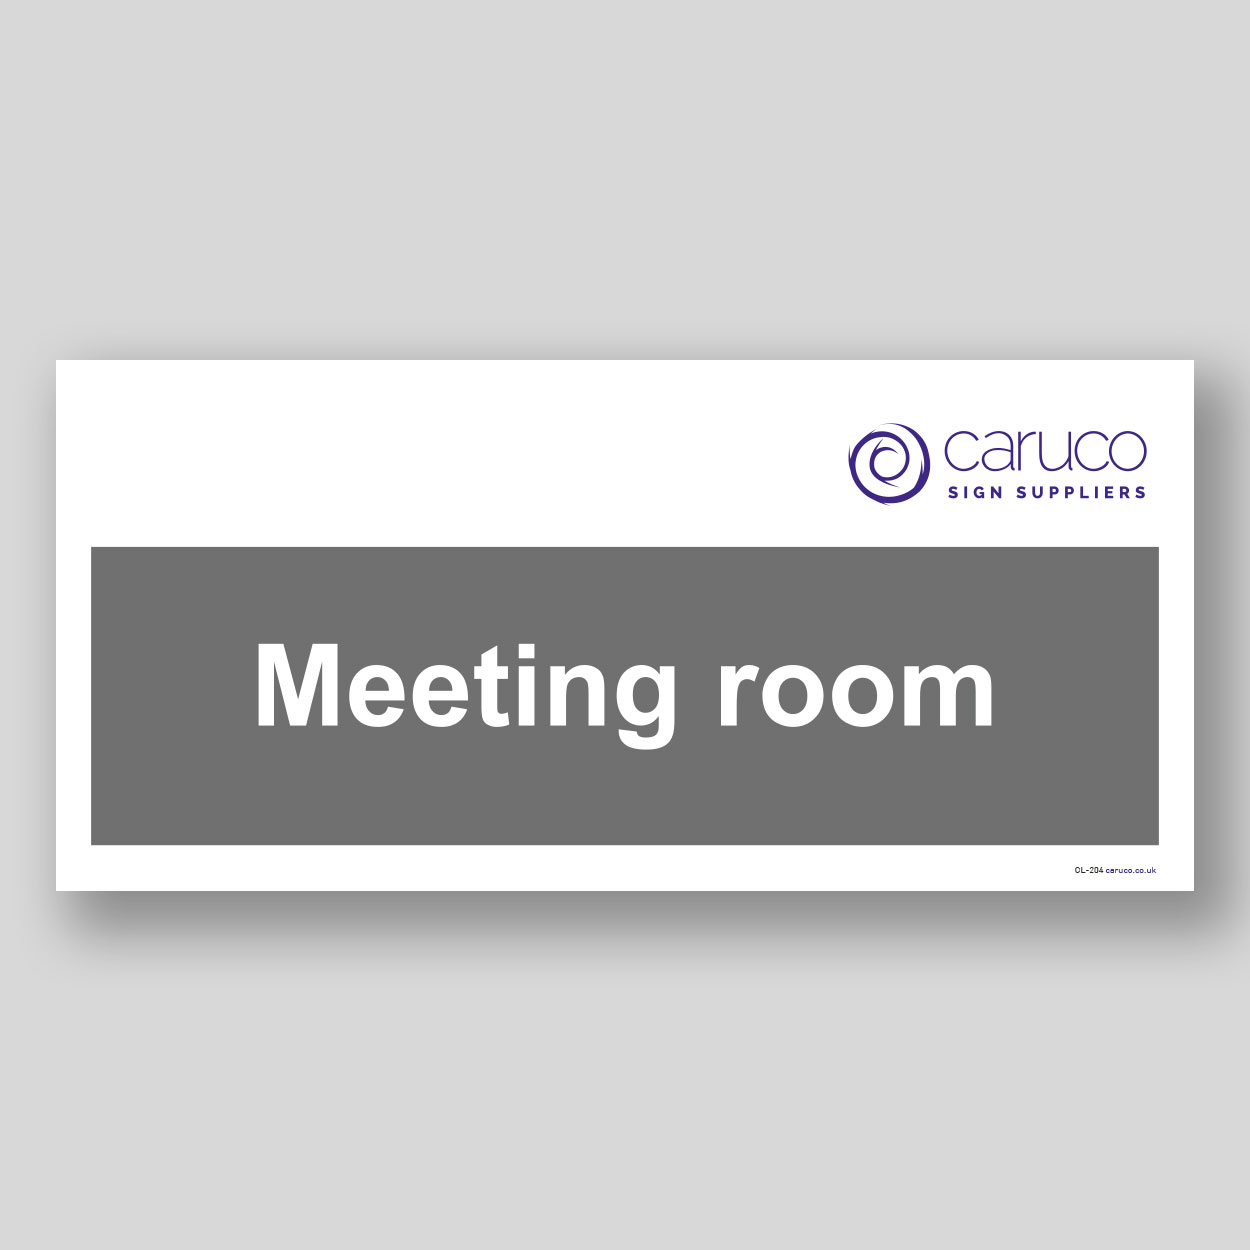 CL-204 Meeting room